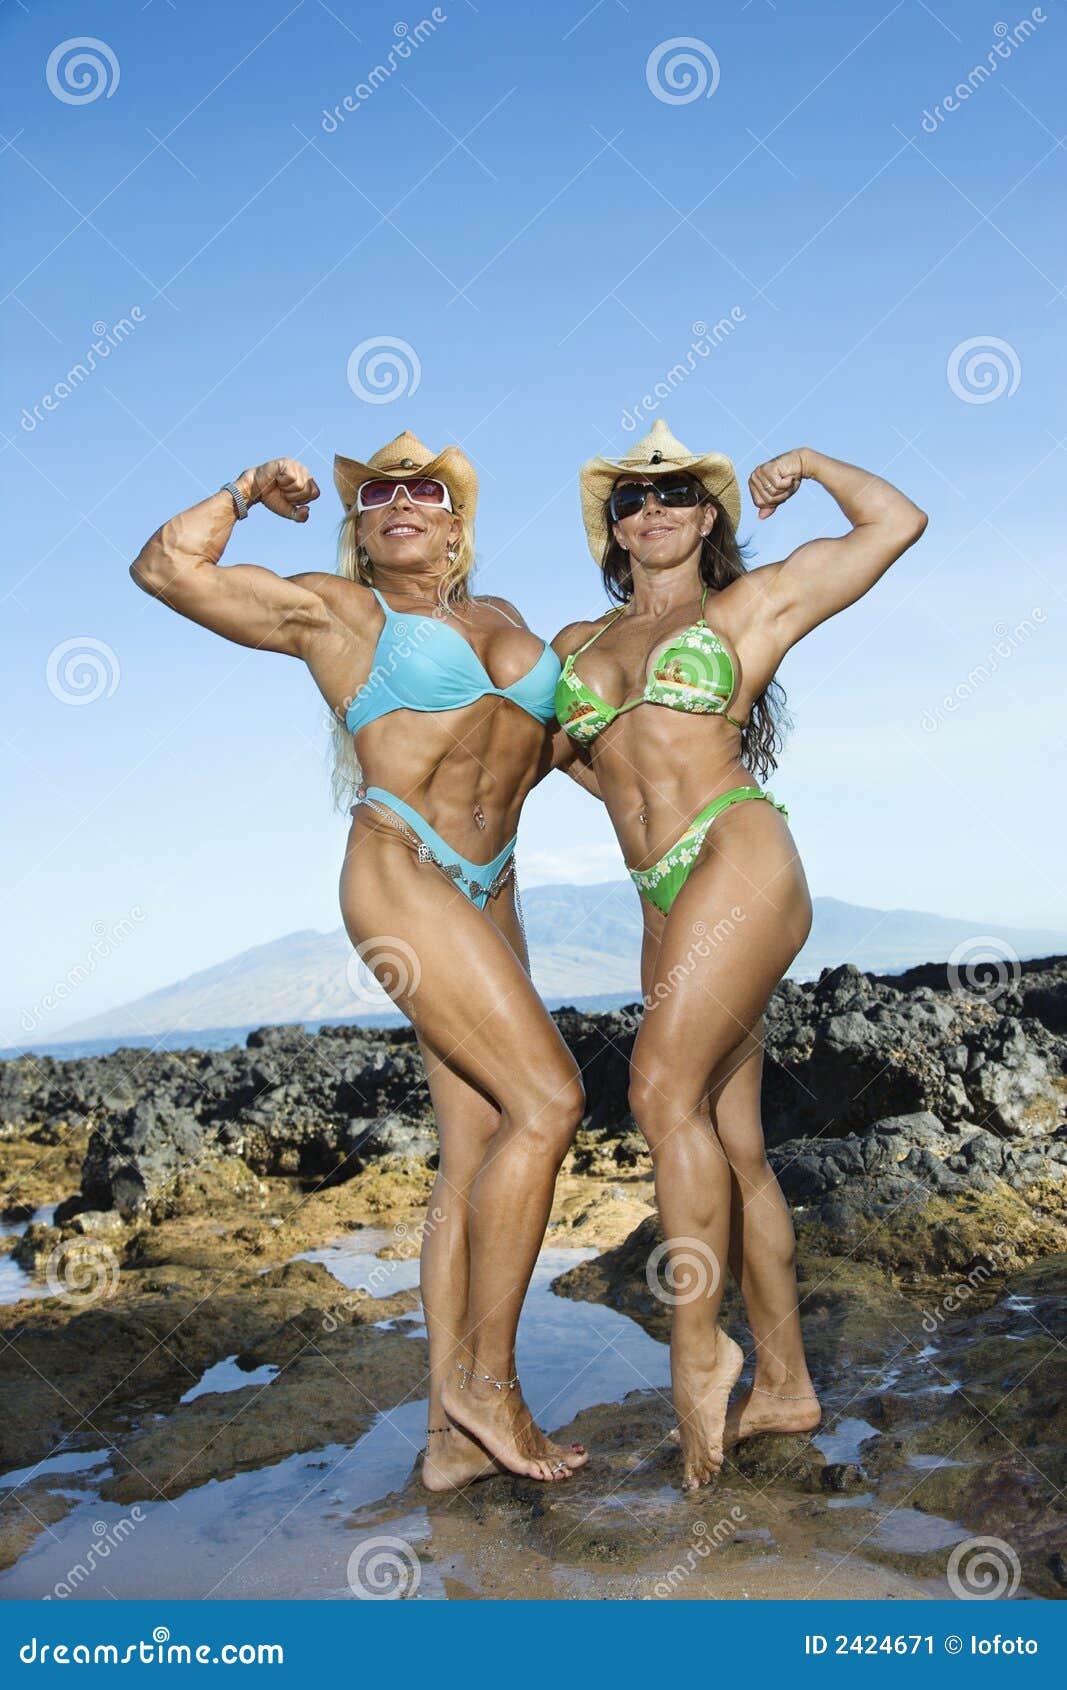 272 Women Bodybuilders Stock Photos